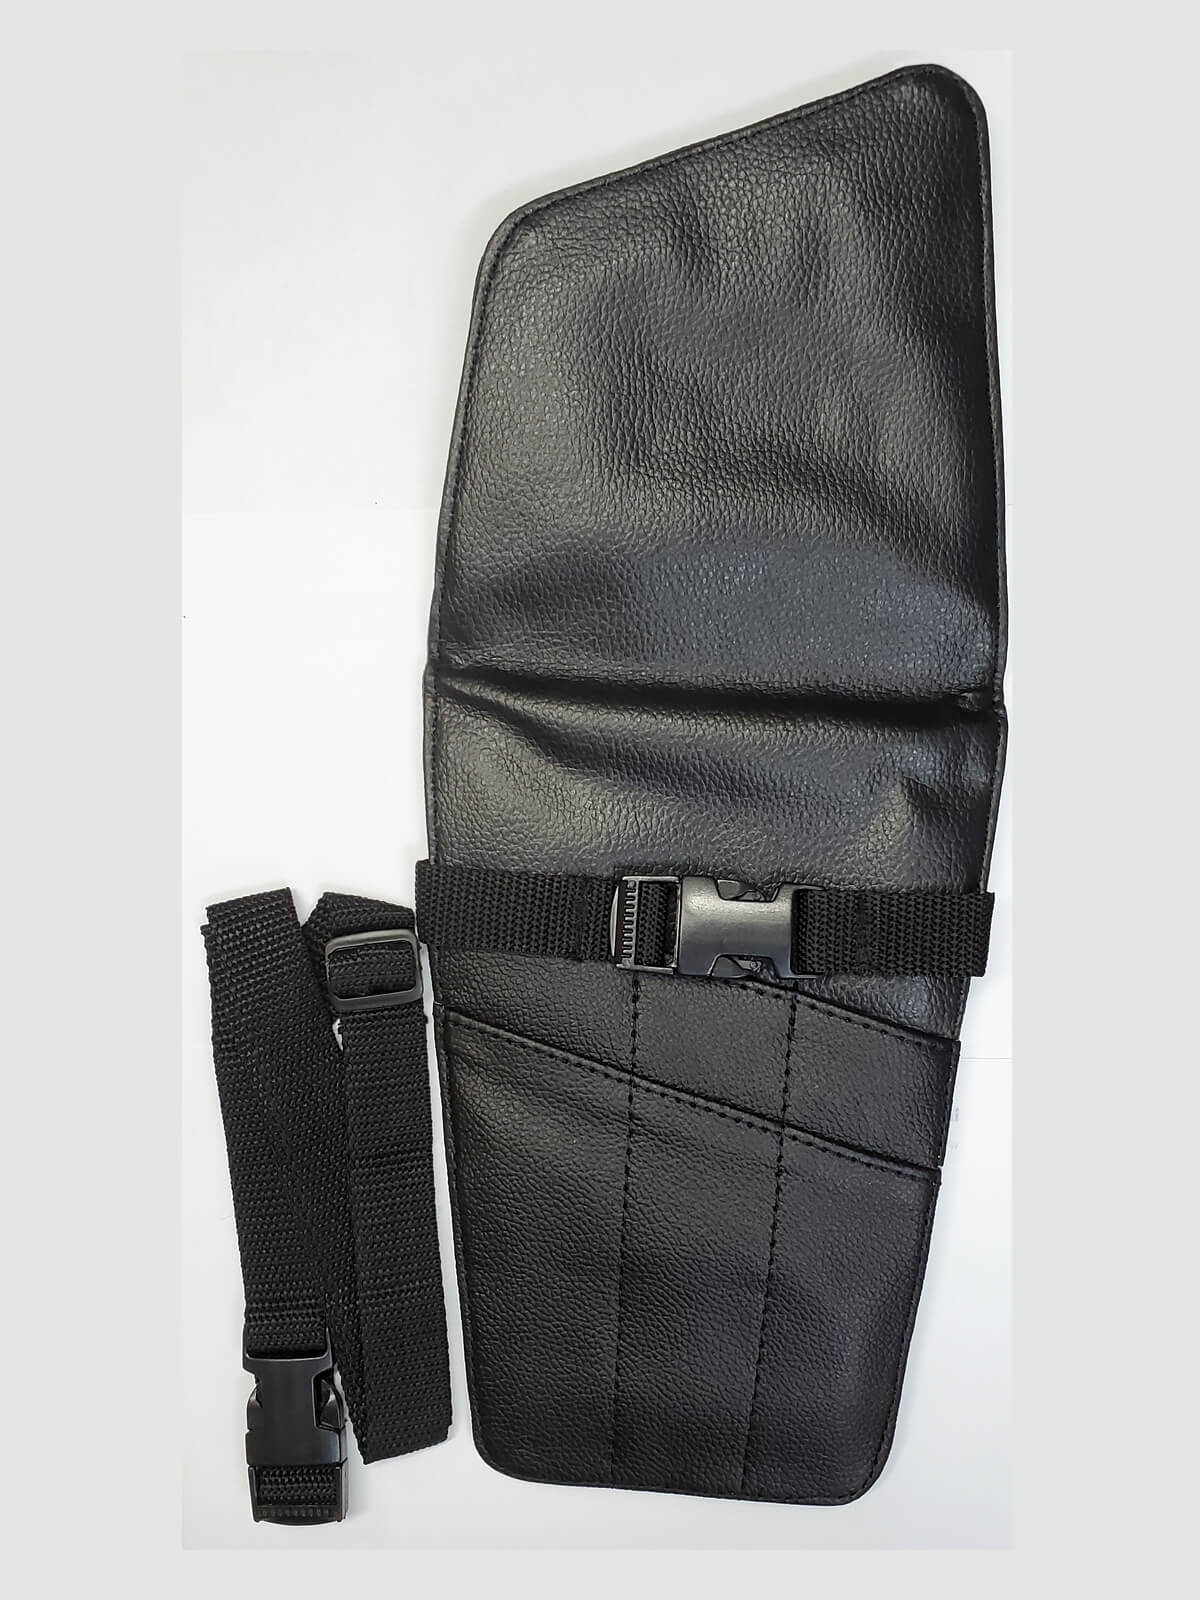 Arius Eickert 6 Pocket Leather Scissor Case-Pet's Choice Supply